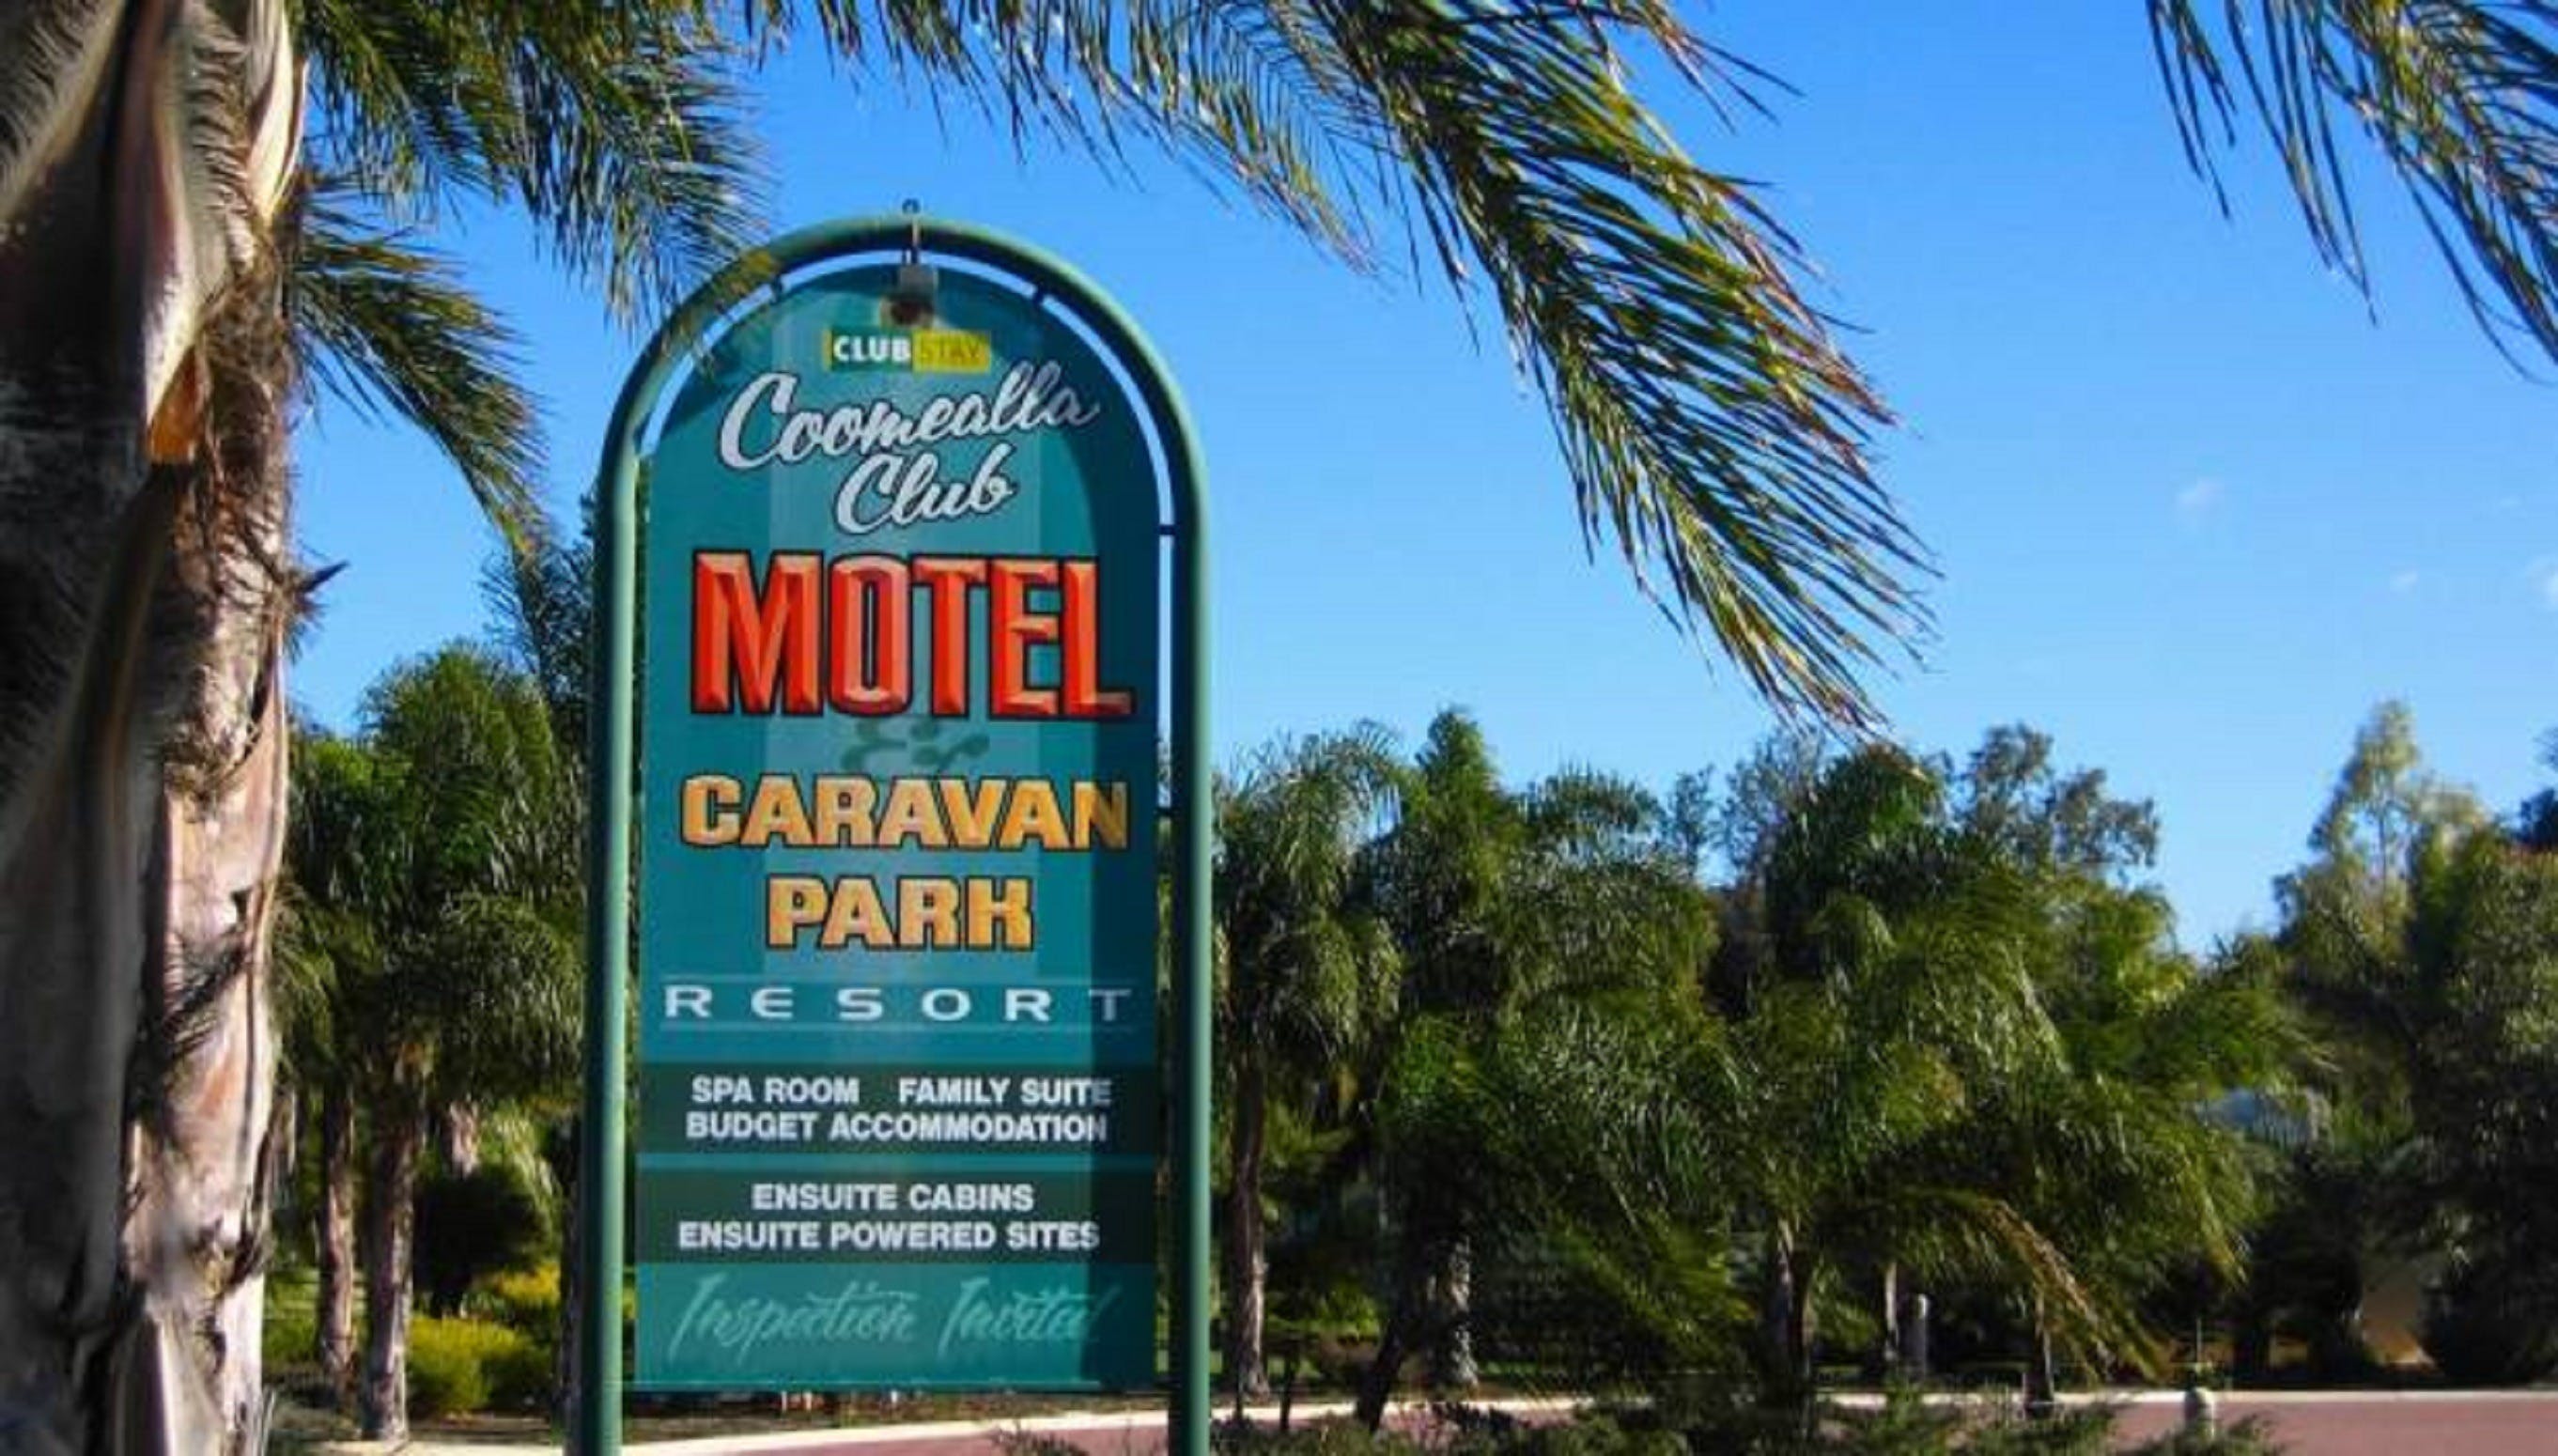 Coomealla Club Motel and Caravan Park Resort - Hervey Bay Accommodation